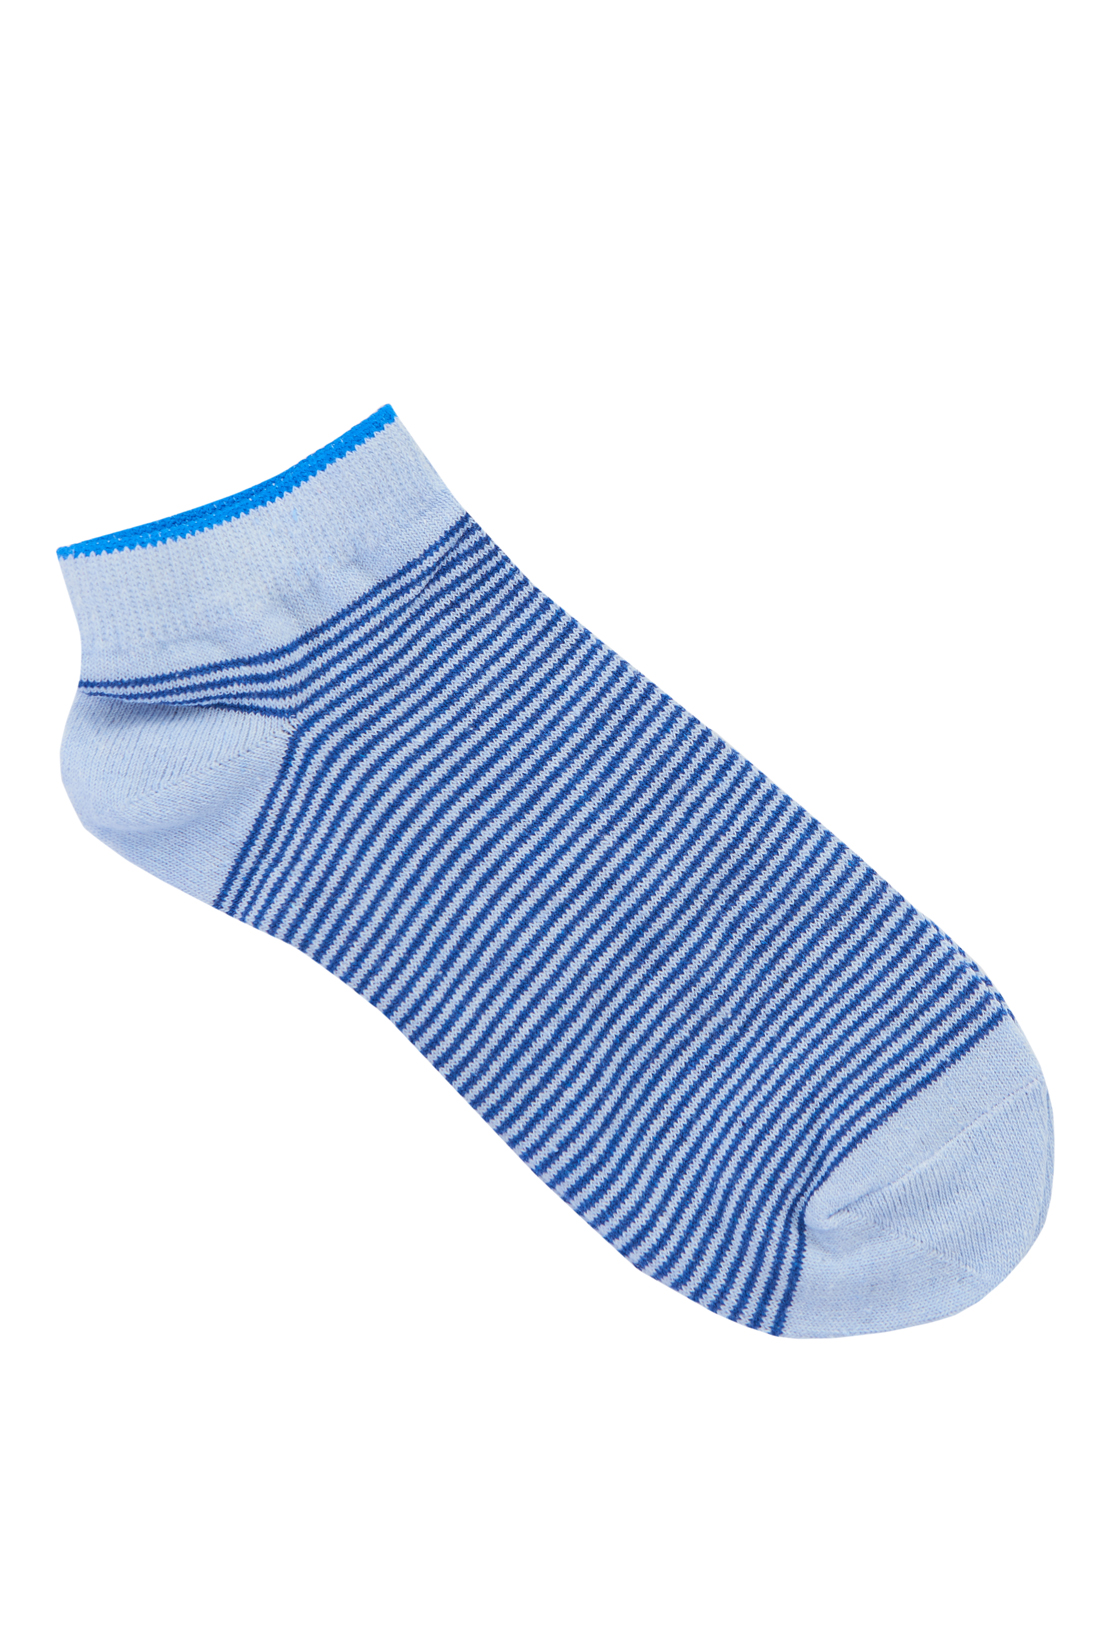 Носки в сине-голубую полоску (арт. baon B398027), размер 38/40, цвет синий